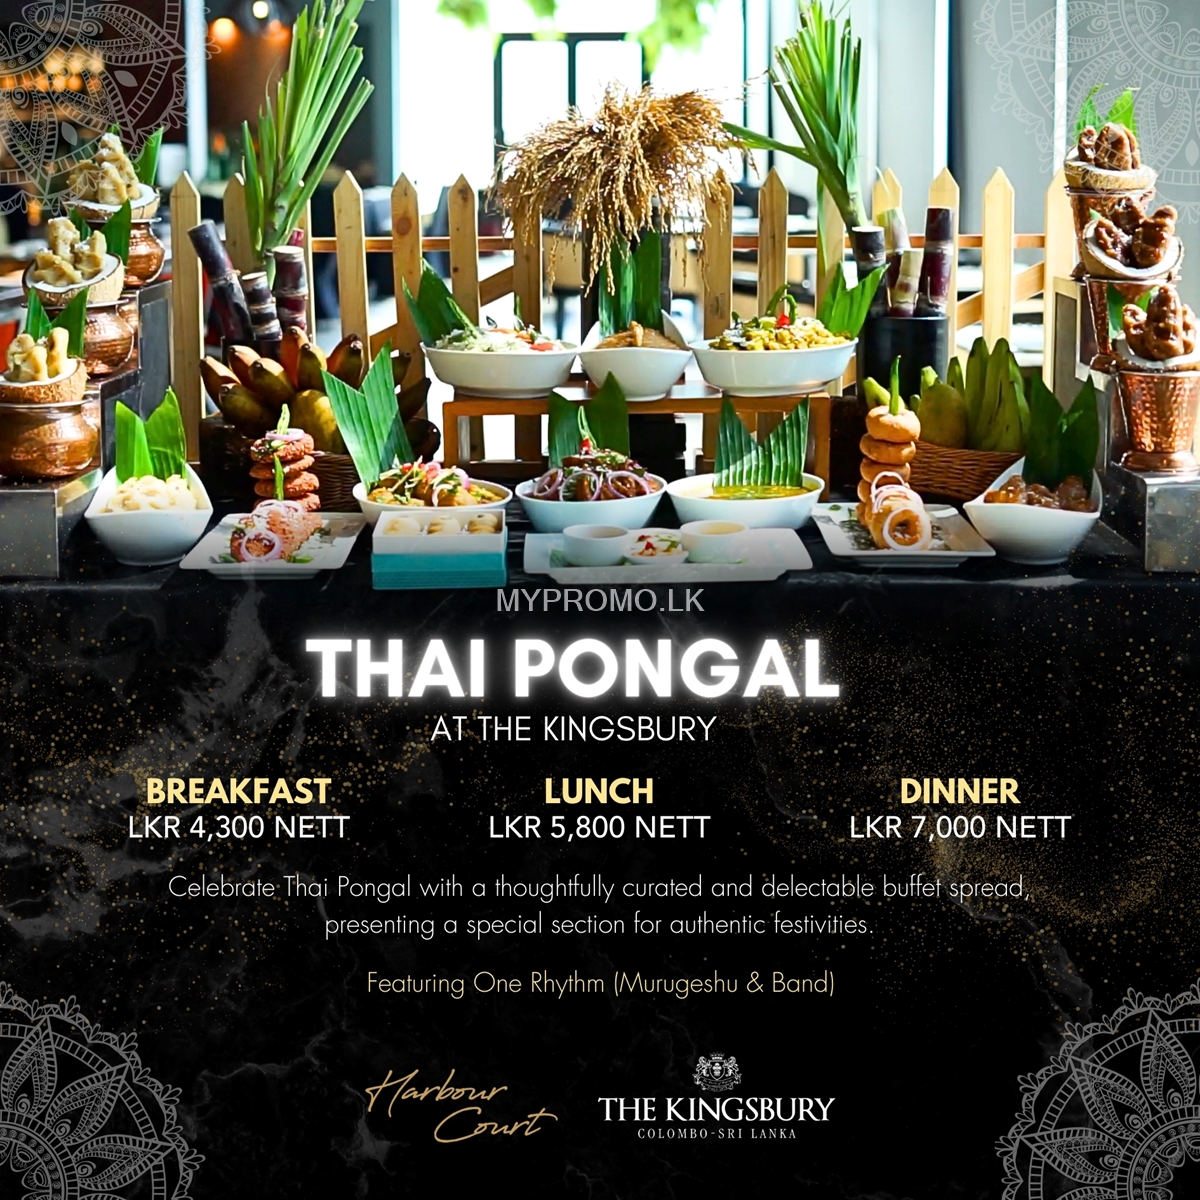 Thai Pongal at The Kingsbury Hotel